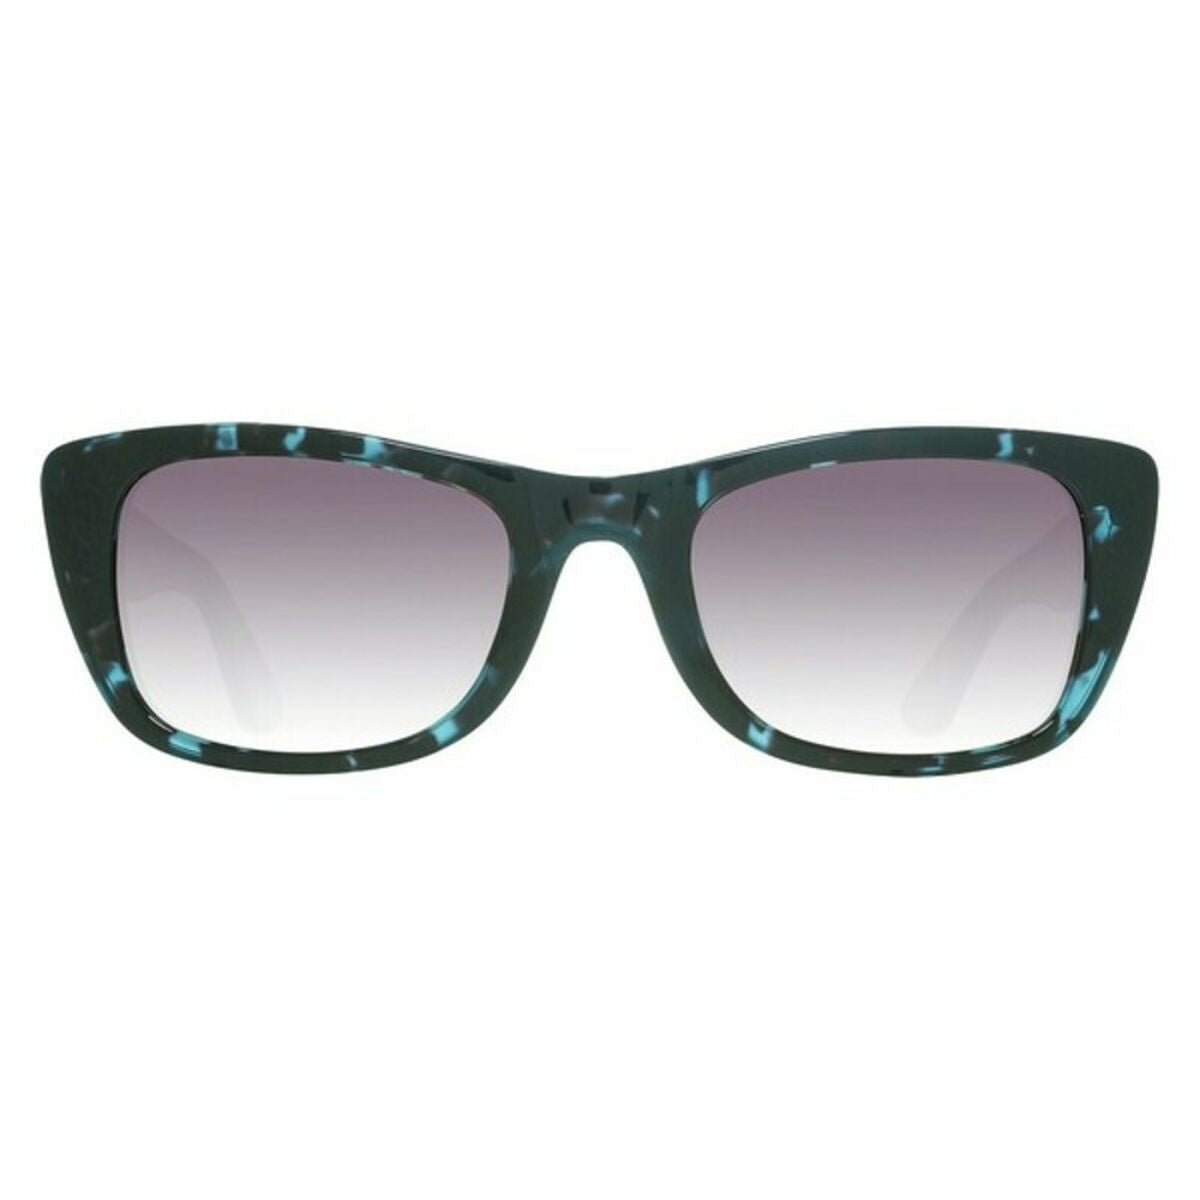 Ladies'Sunglasses Just Cavalli